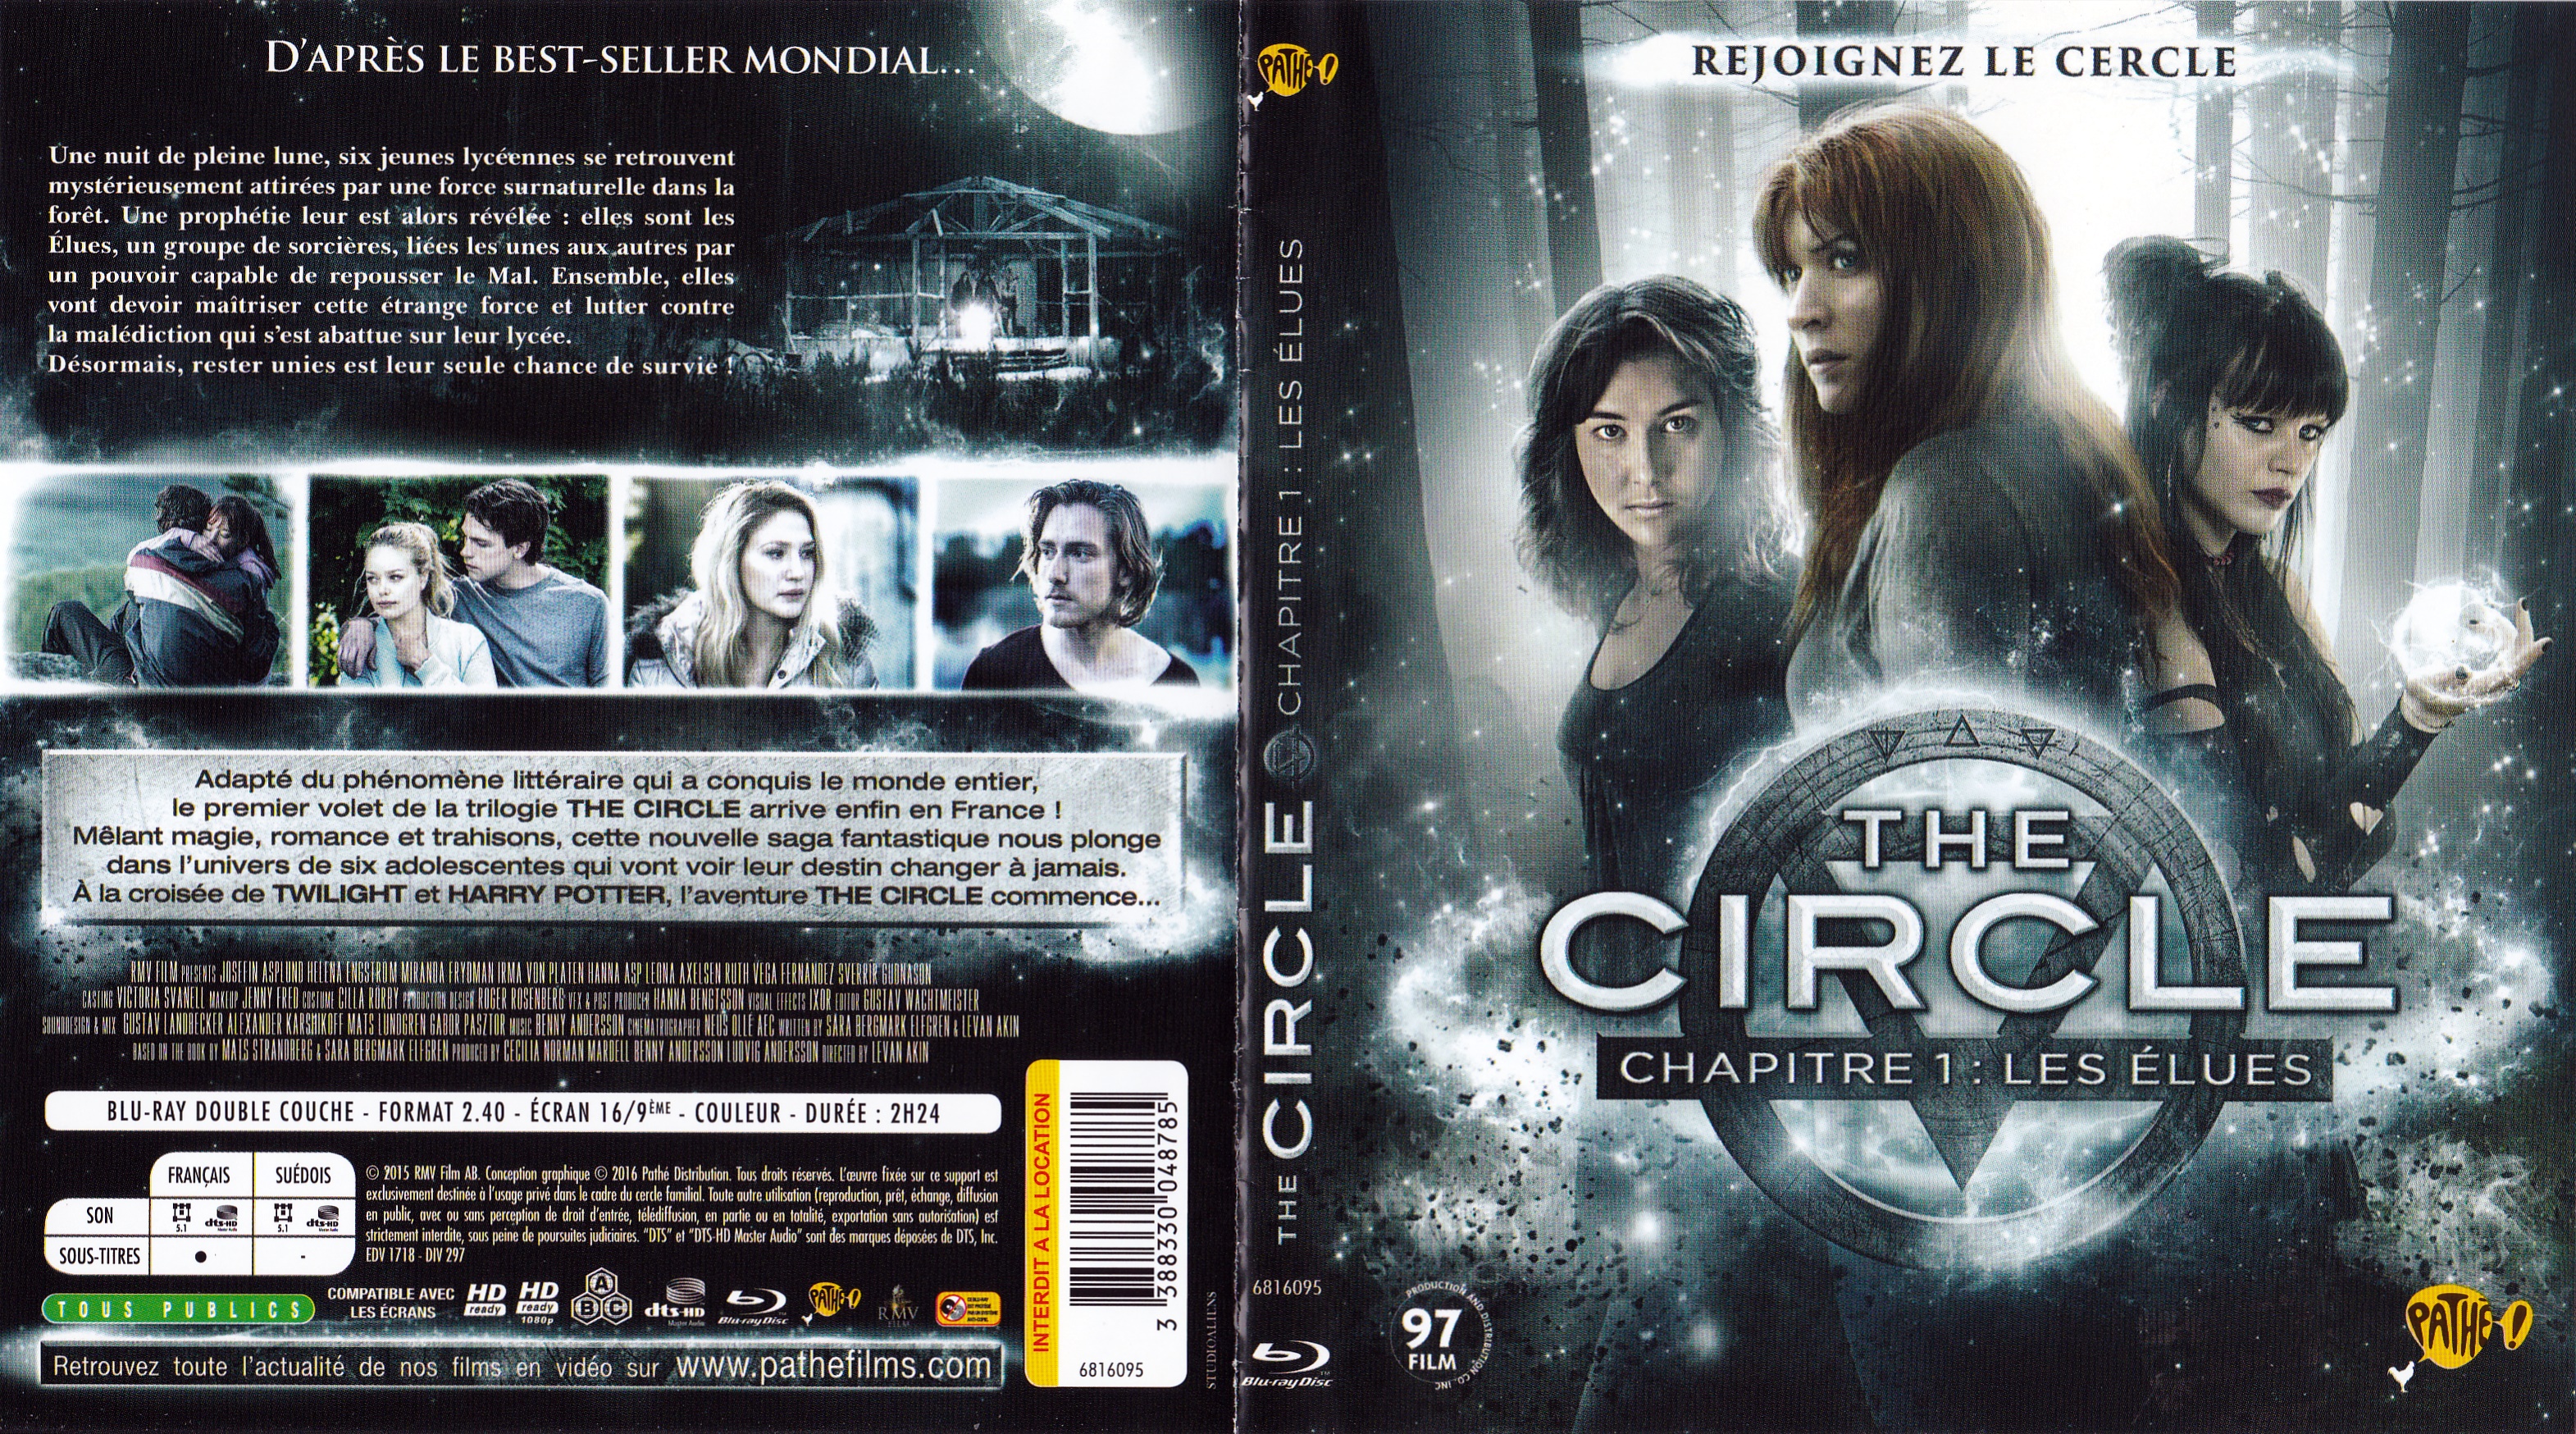 Jaquette DVD The circle - Chapitre 1 - Les elues (BLU-RAY)